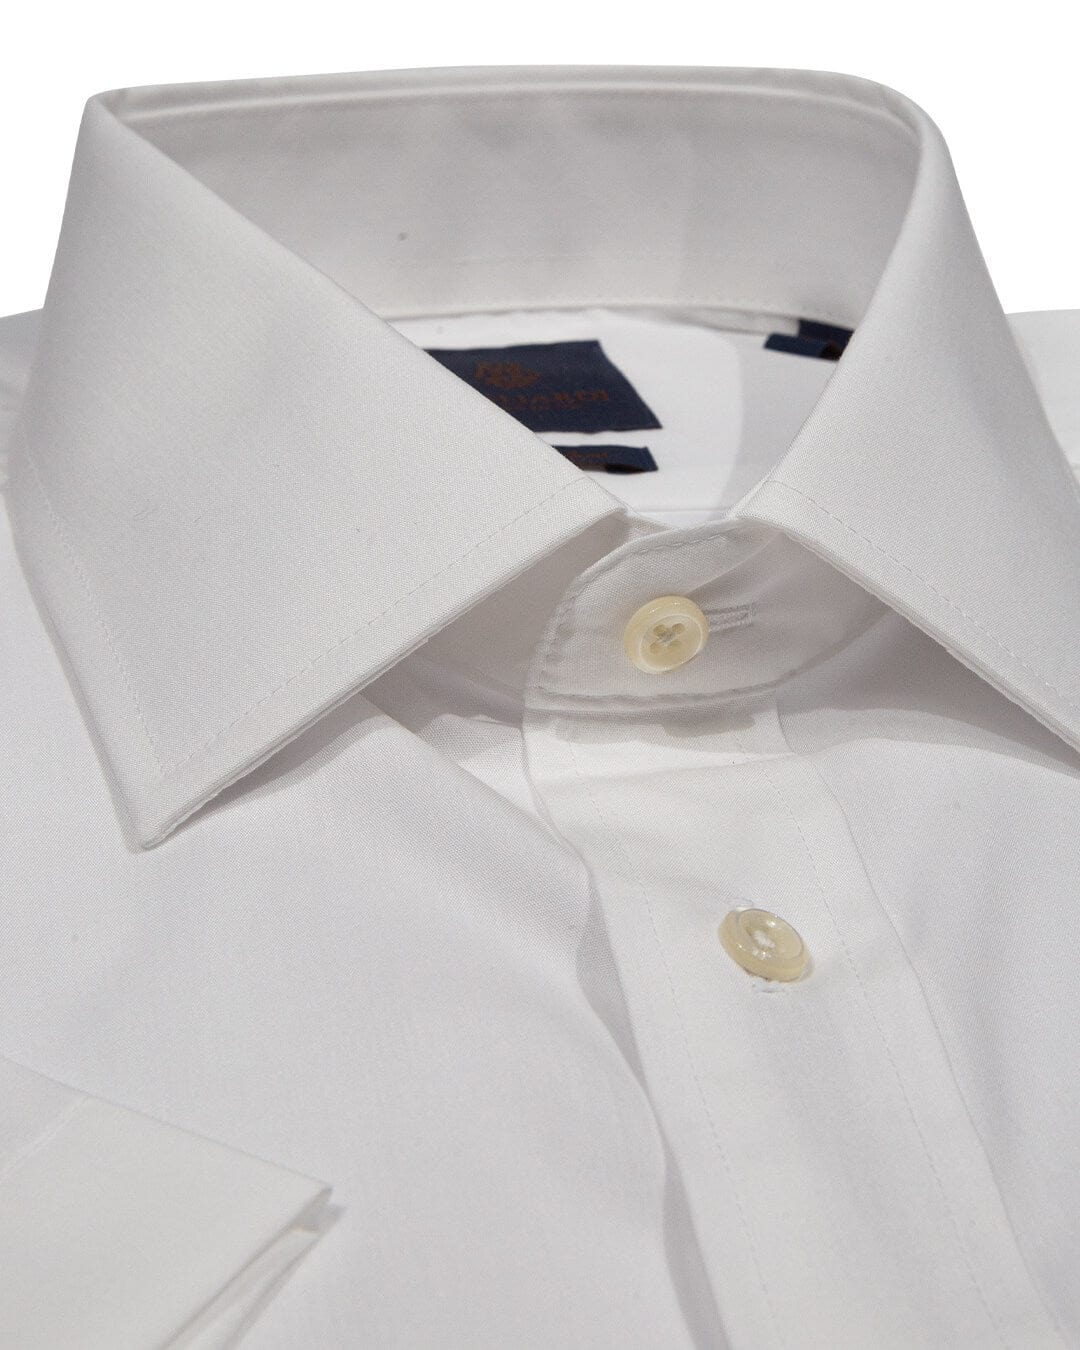 Gagliardi Shirts Gagliardi Tailored Fit White Poplin Non-iron Short Sleeve Shirt